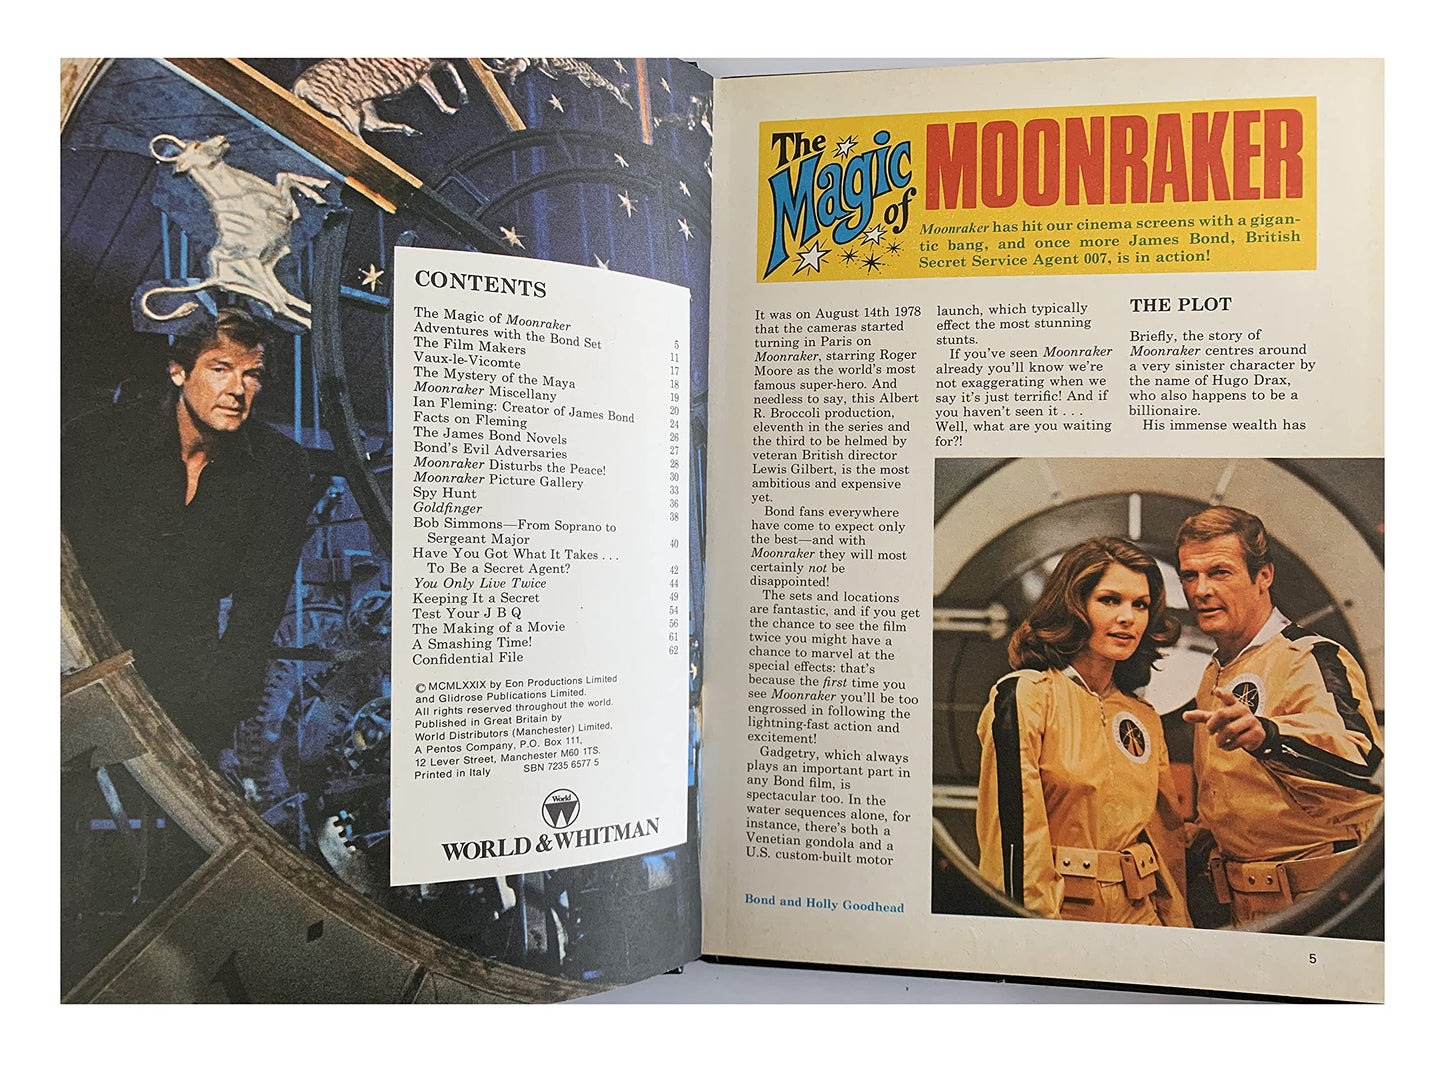 Vintage James Bond 007 Moonraker Special Annual 1979